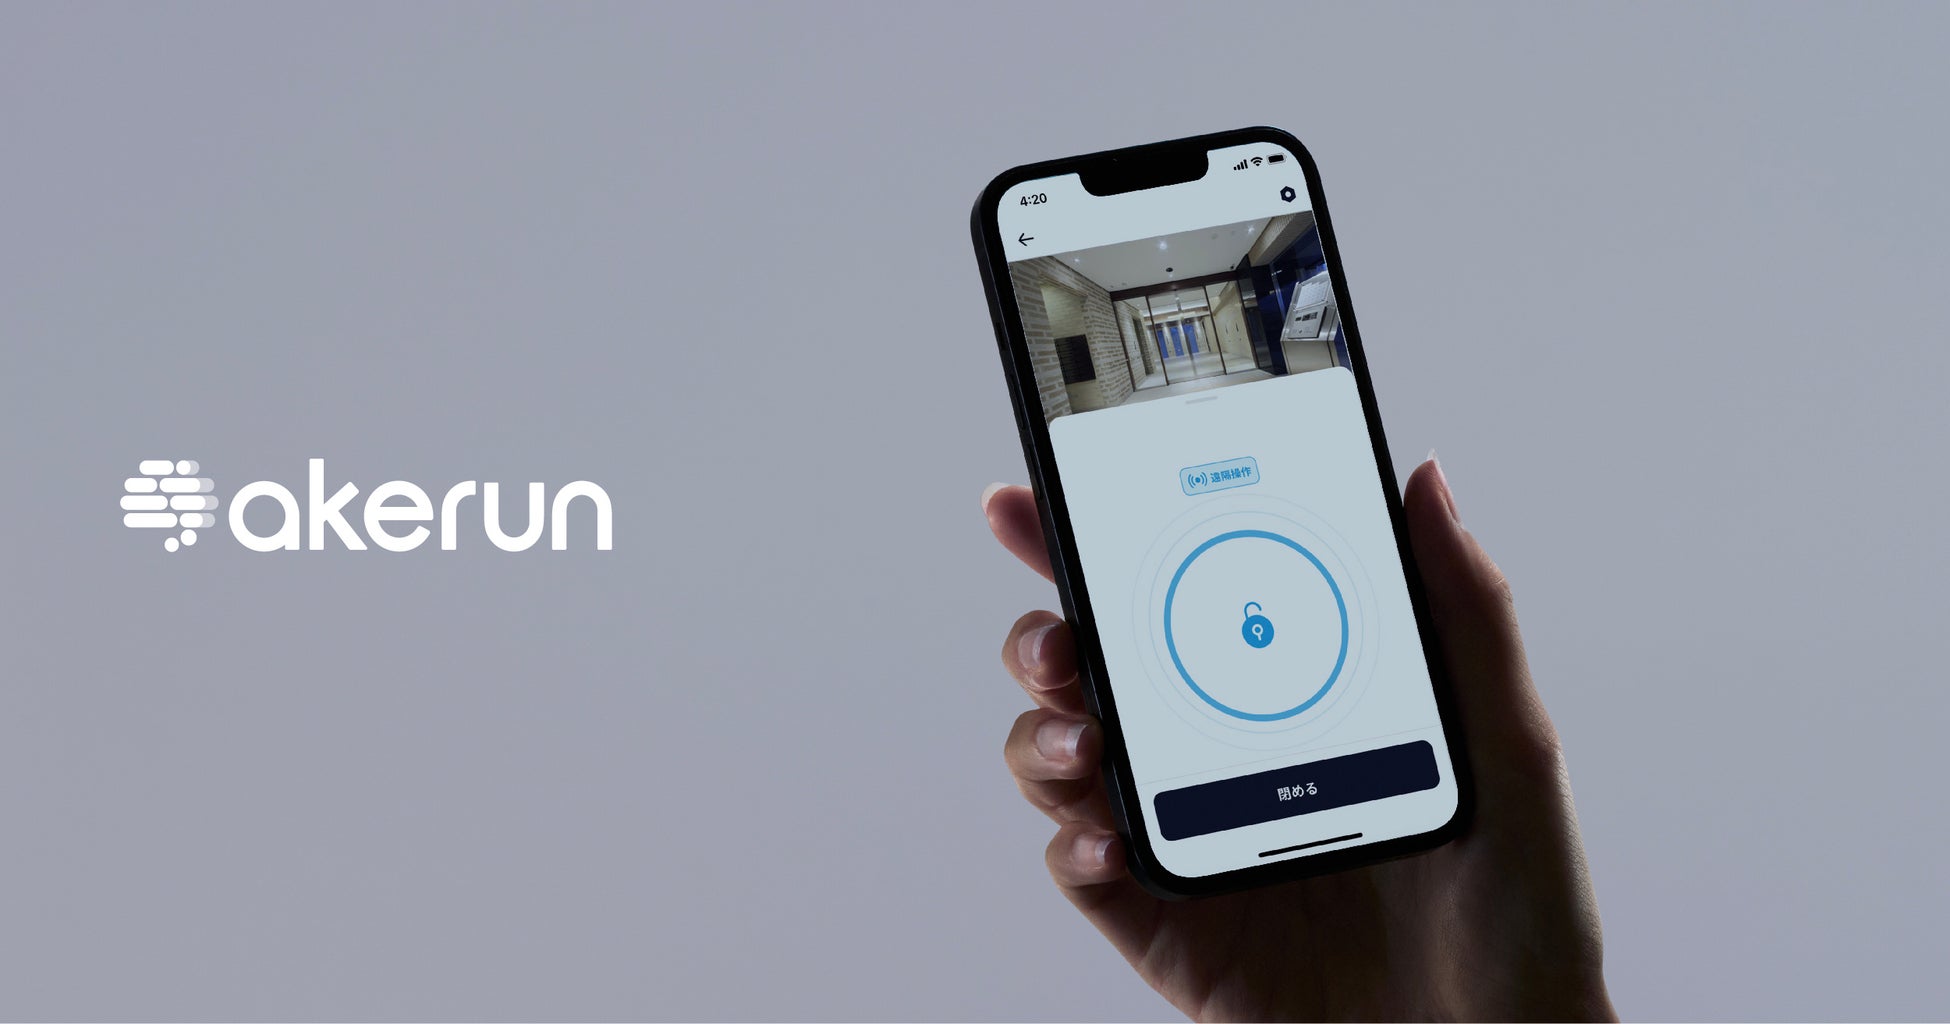 Akerunのモバイルアプリの最新バージョンを提供開始、Akerunアプリ上での管理性や使いやすさが向上のサブ画像1